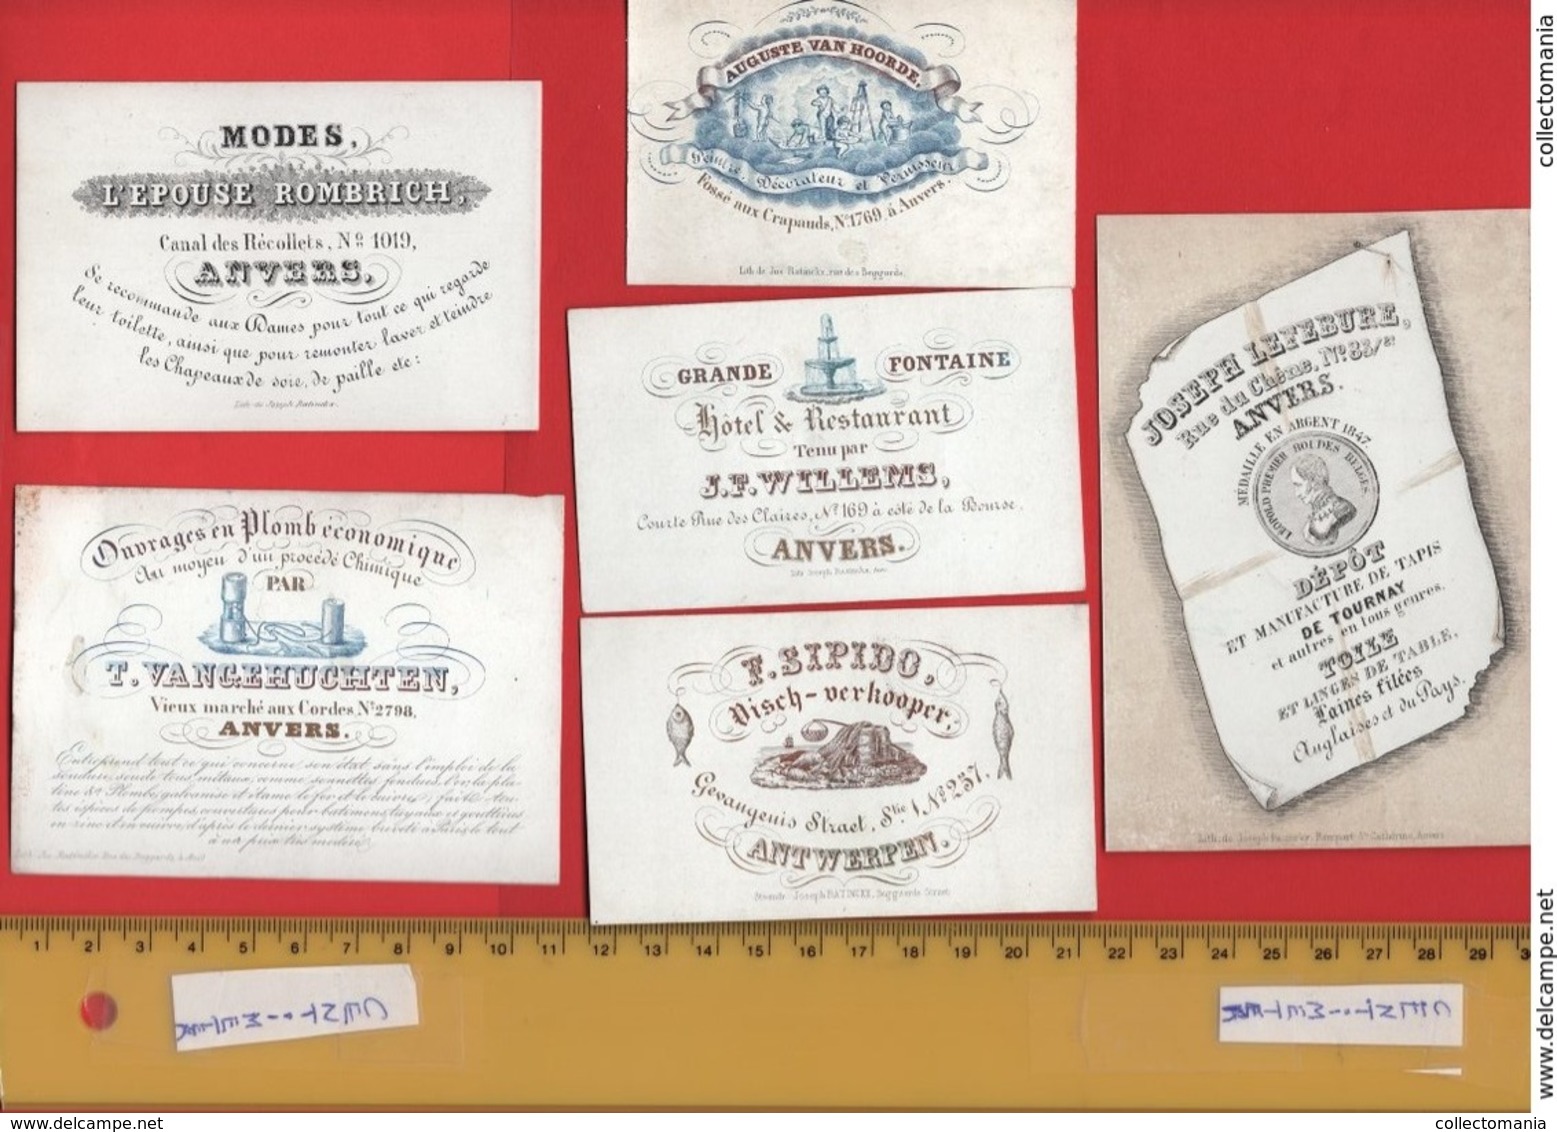 Lot85C: 6 ViSiT Cards, Printer: All  RATiNCKX In ANVERS Antwerpen Porseleinkaarten Circa 1840 à1860 Hand Press Litho - Porcelaine